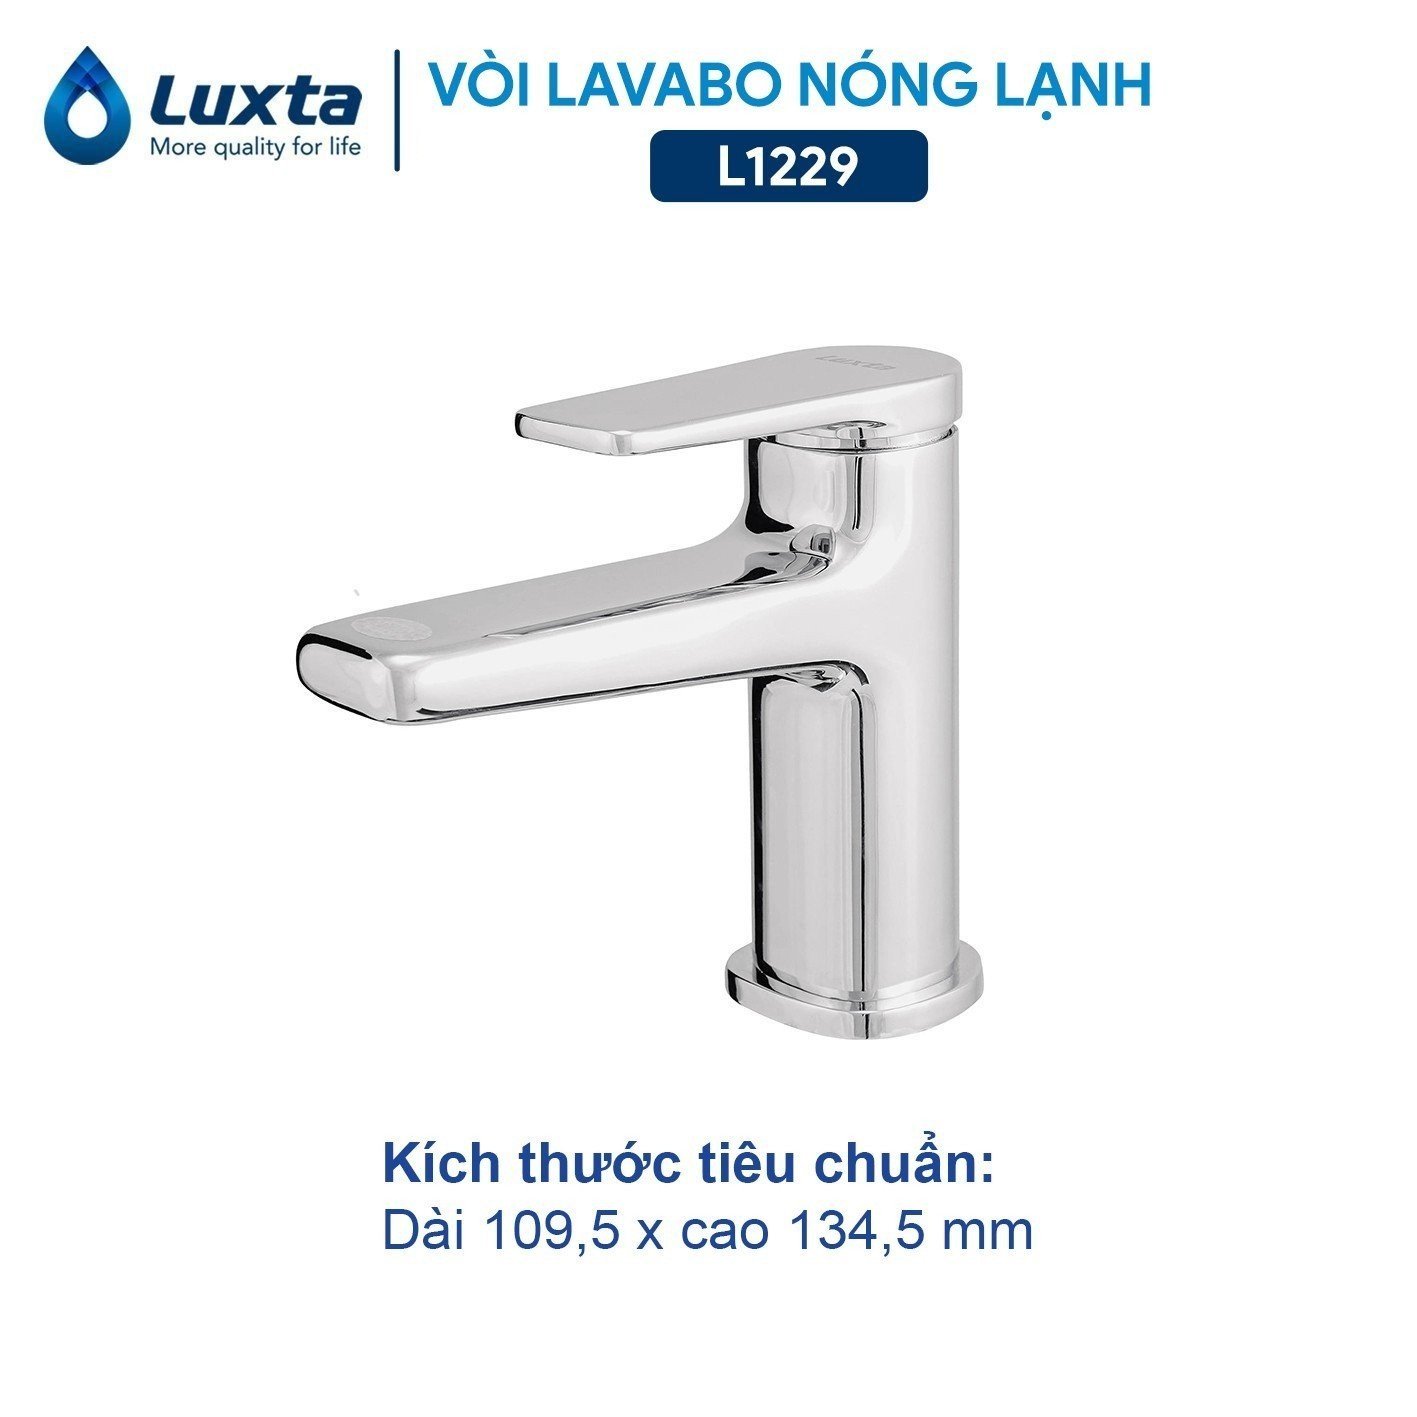 voi-lavabo/voi-lavabo-nong-lanh-luxta-l1229-chinh-hang-vattugiagoc.com